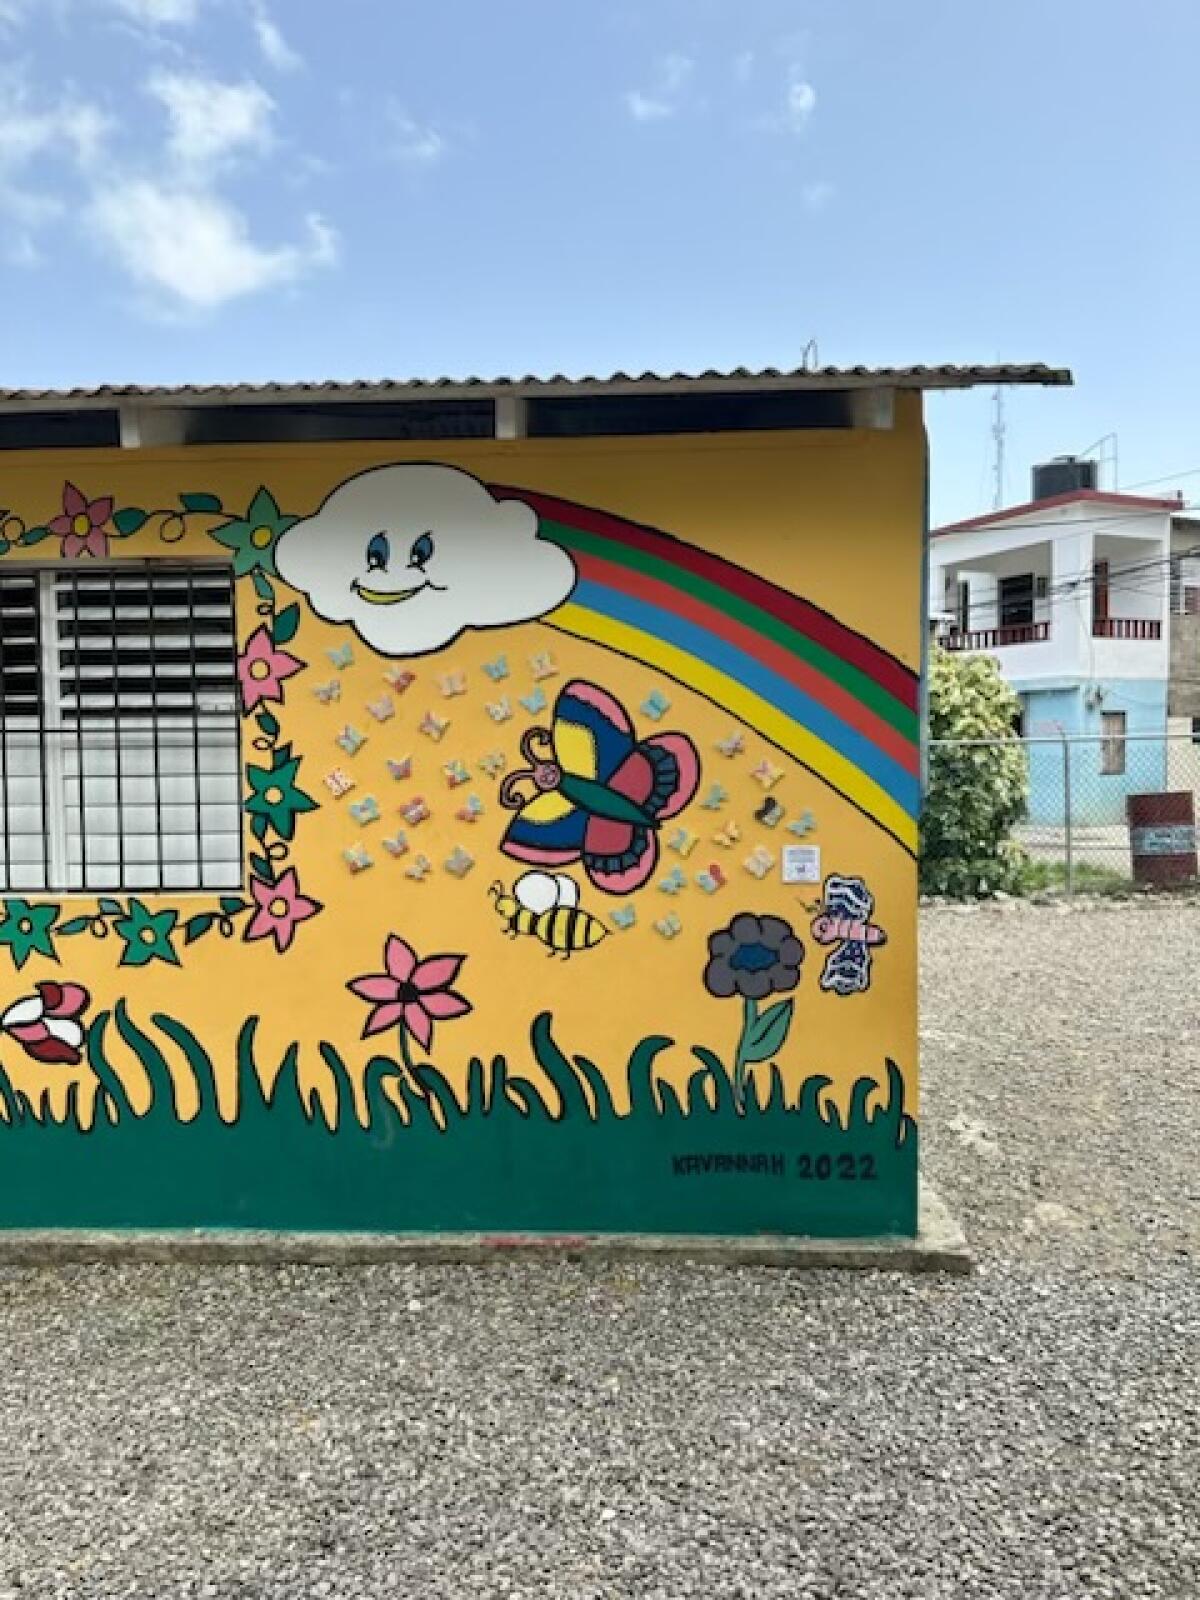 Ceramic butterflies adorn a mural at the La Libertad school in the Dominican Republic.